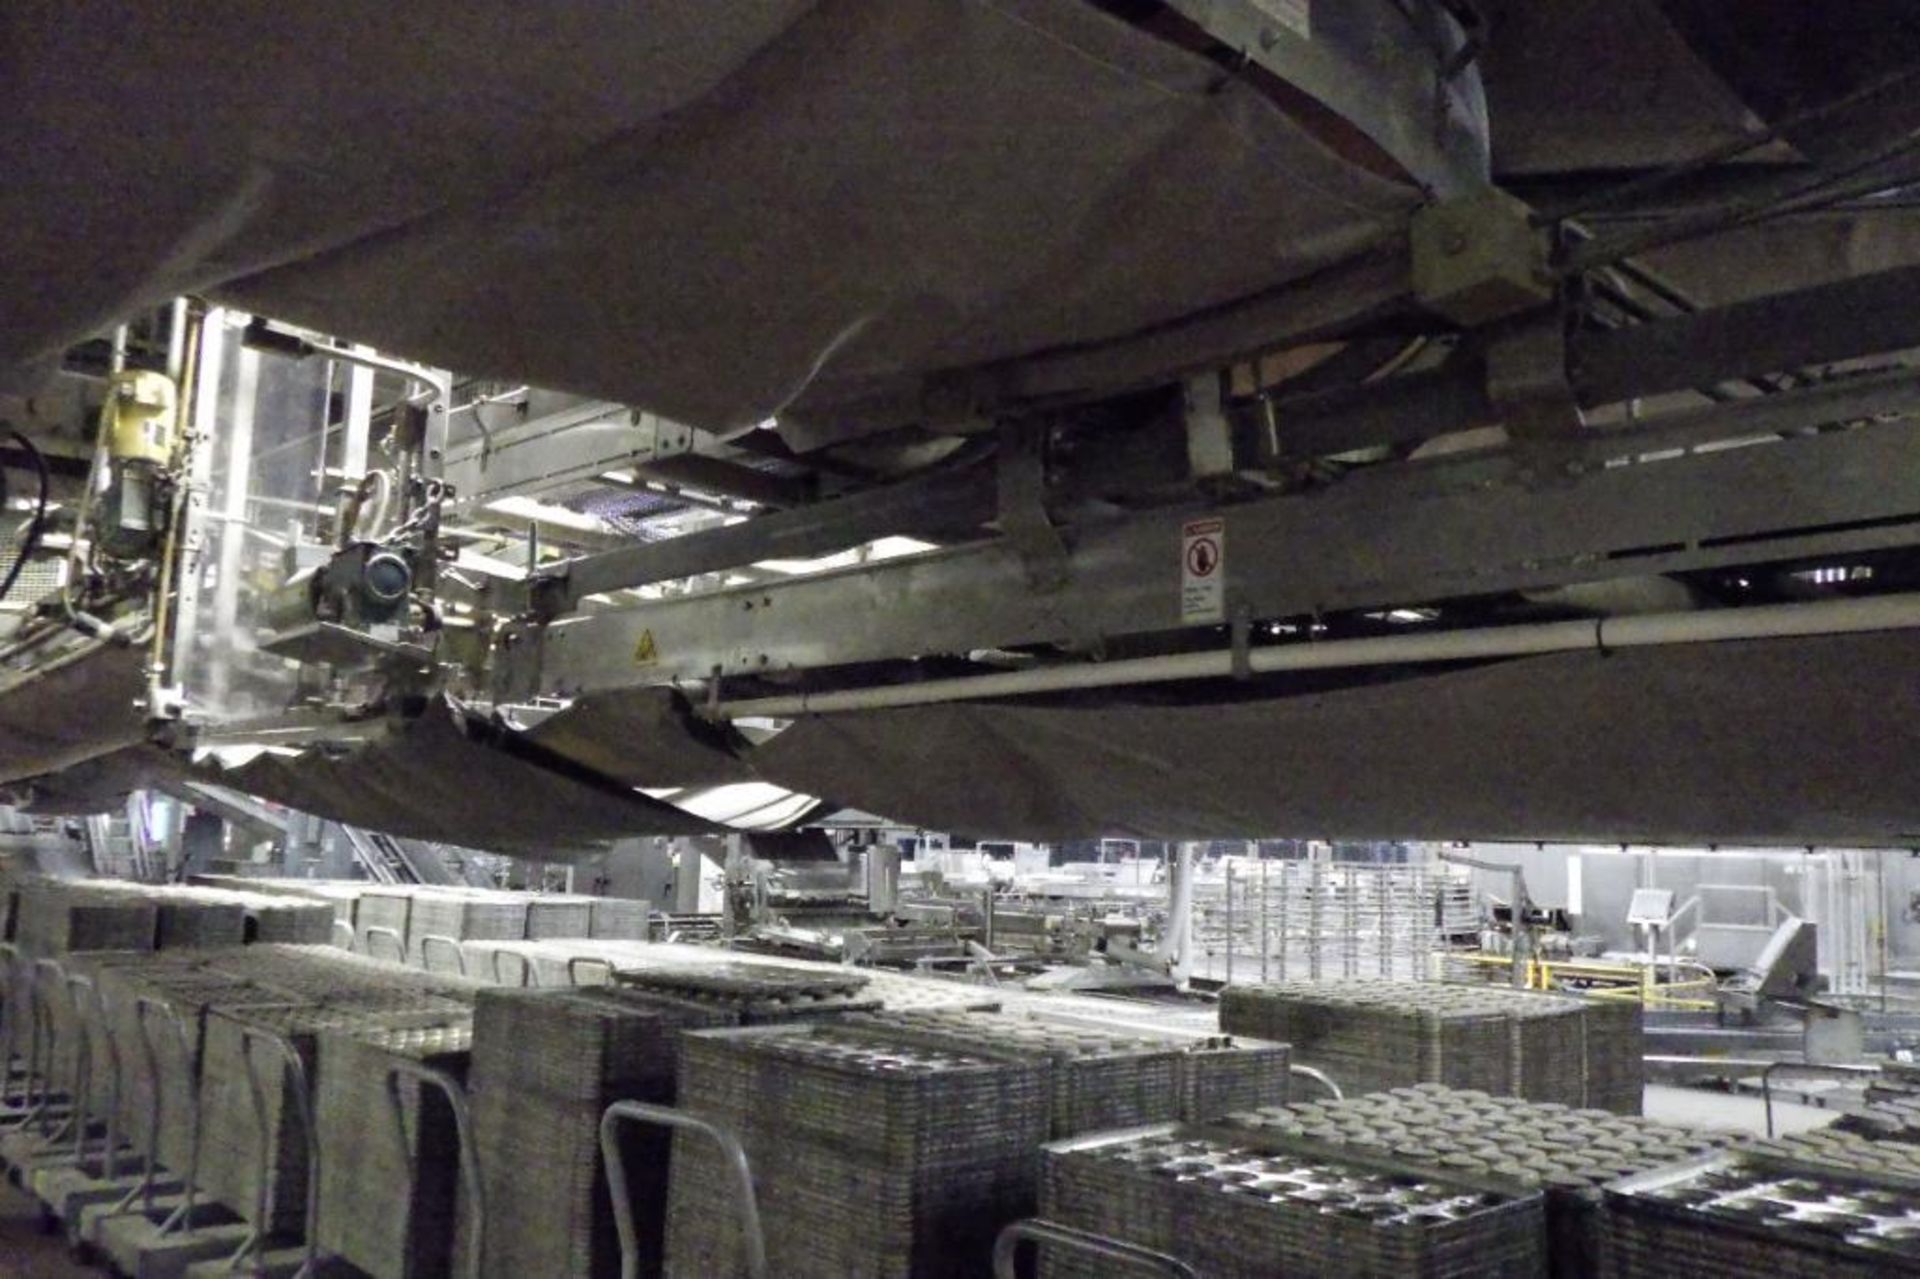 Stewart systems overhead conveyor - Image 3 of 29